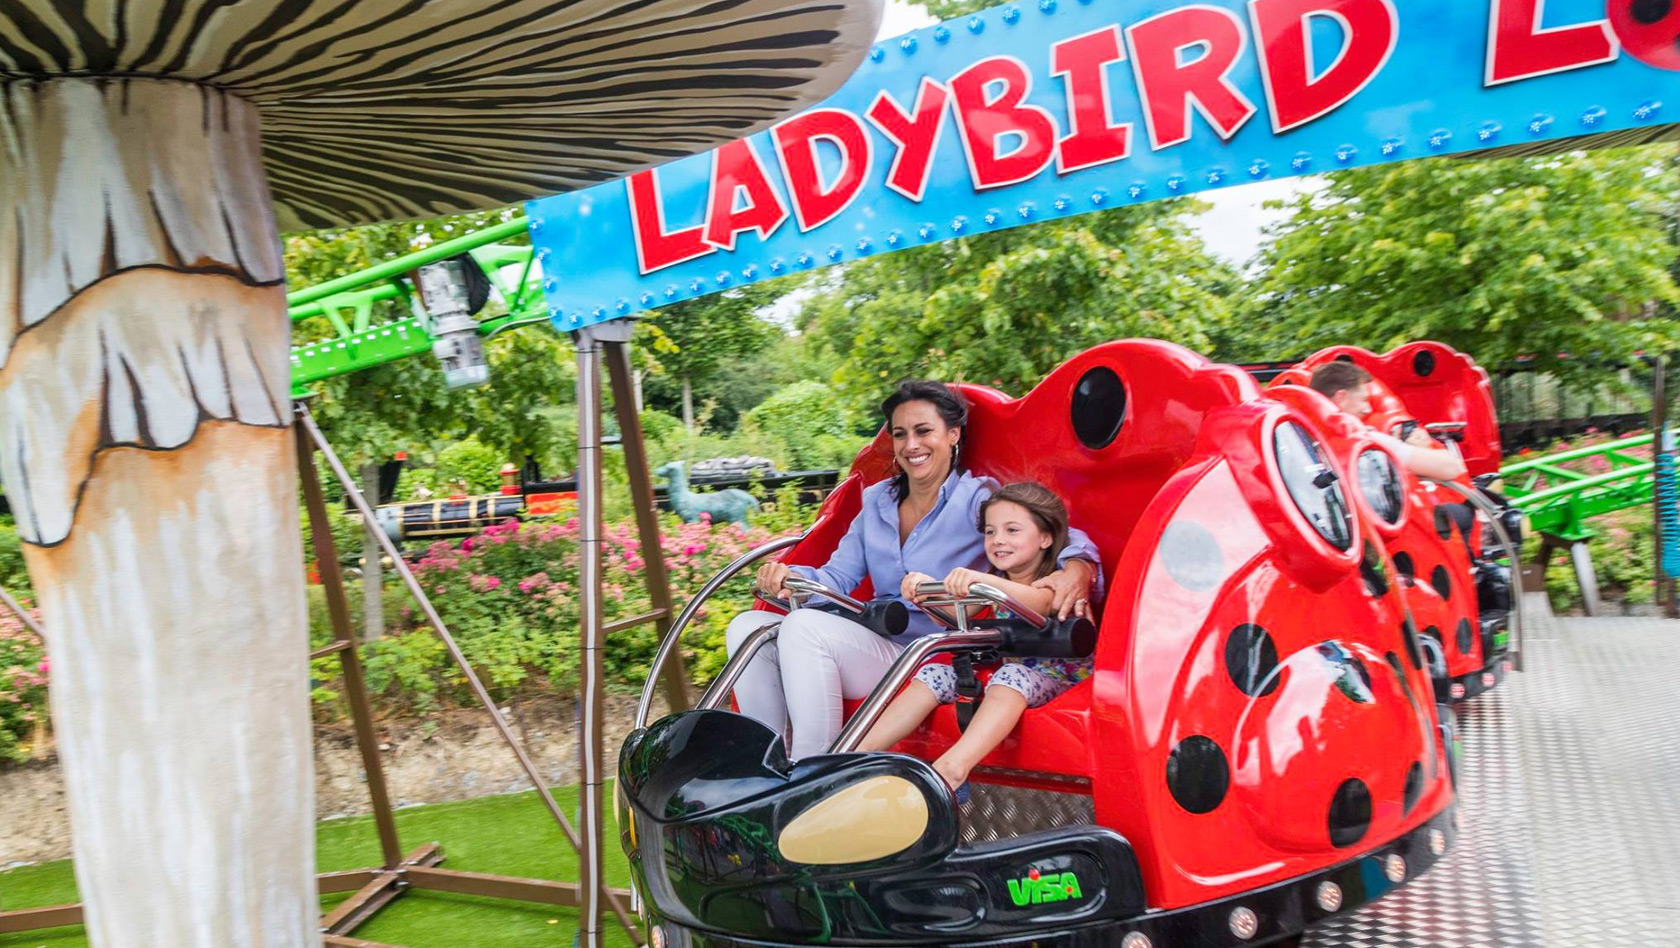 Tayto Park Ladybird Loop